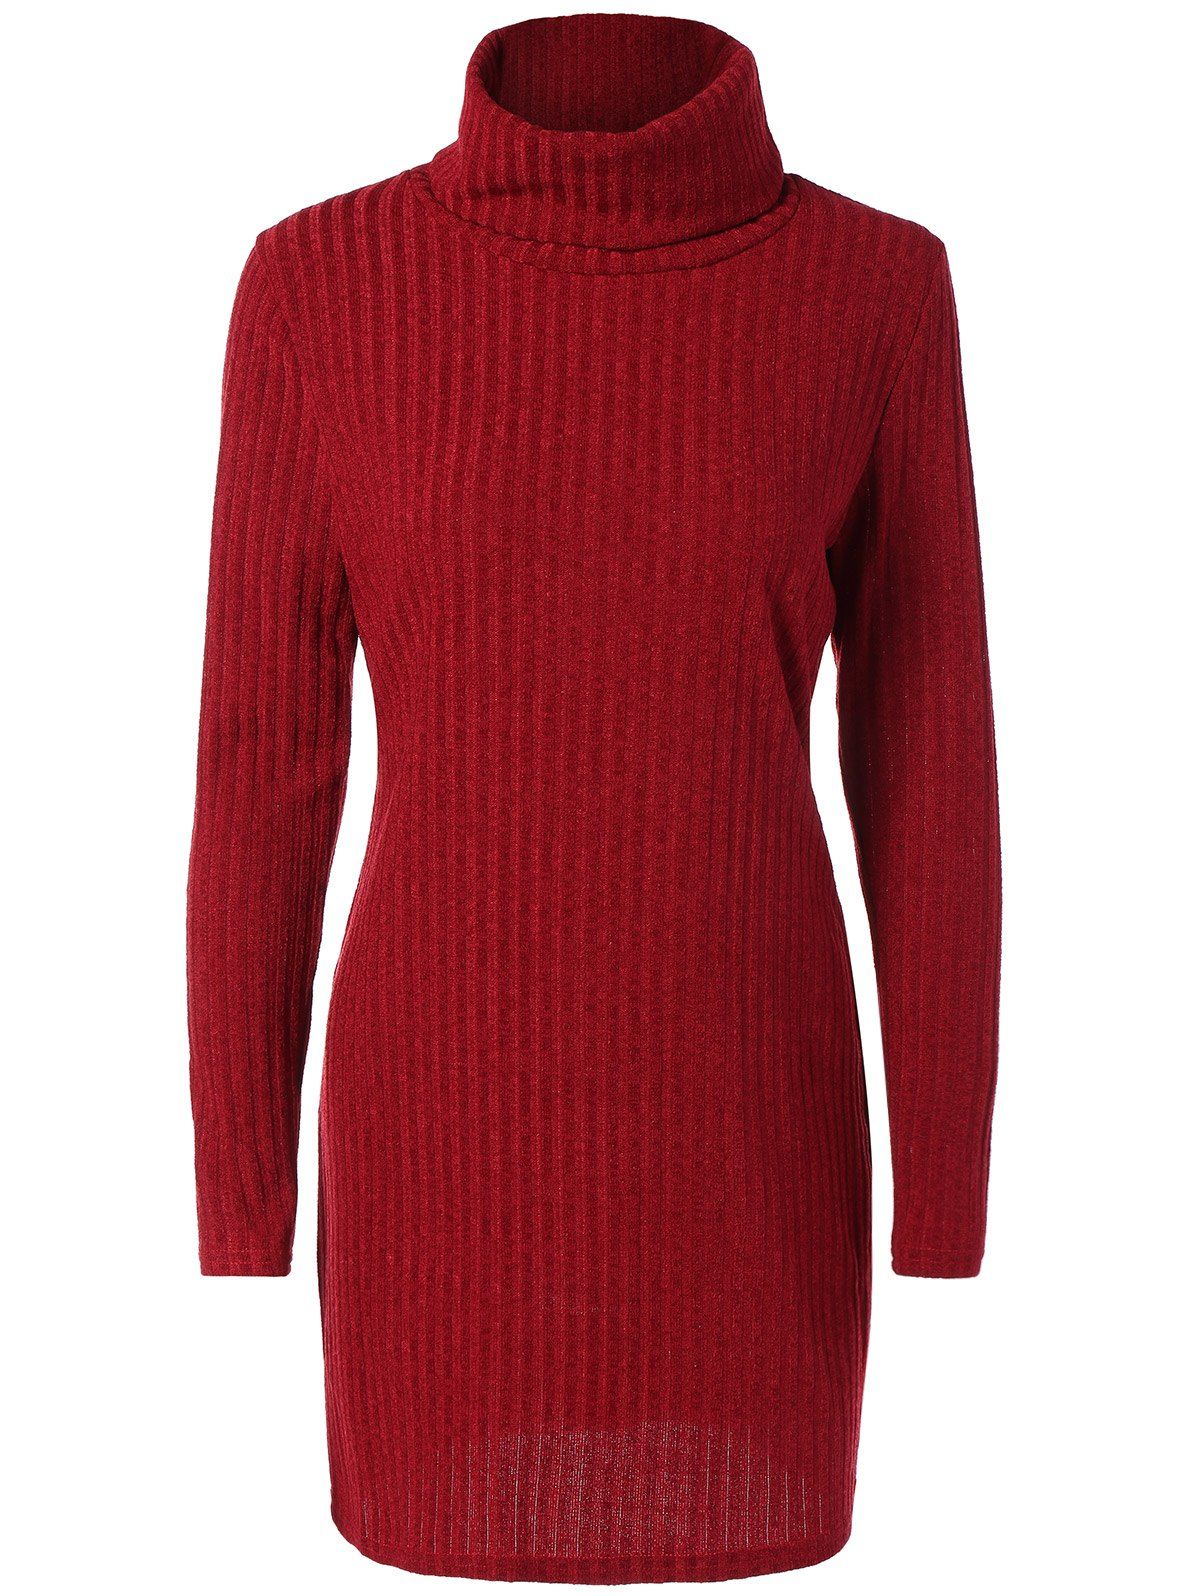 Красное платье-свитер Zolla